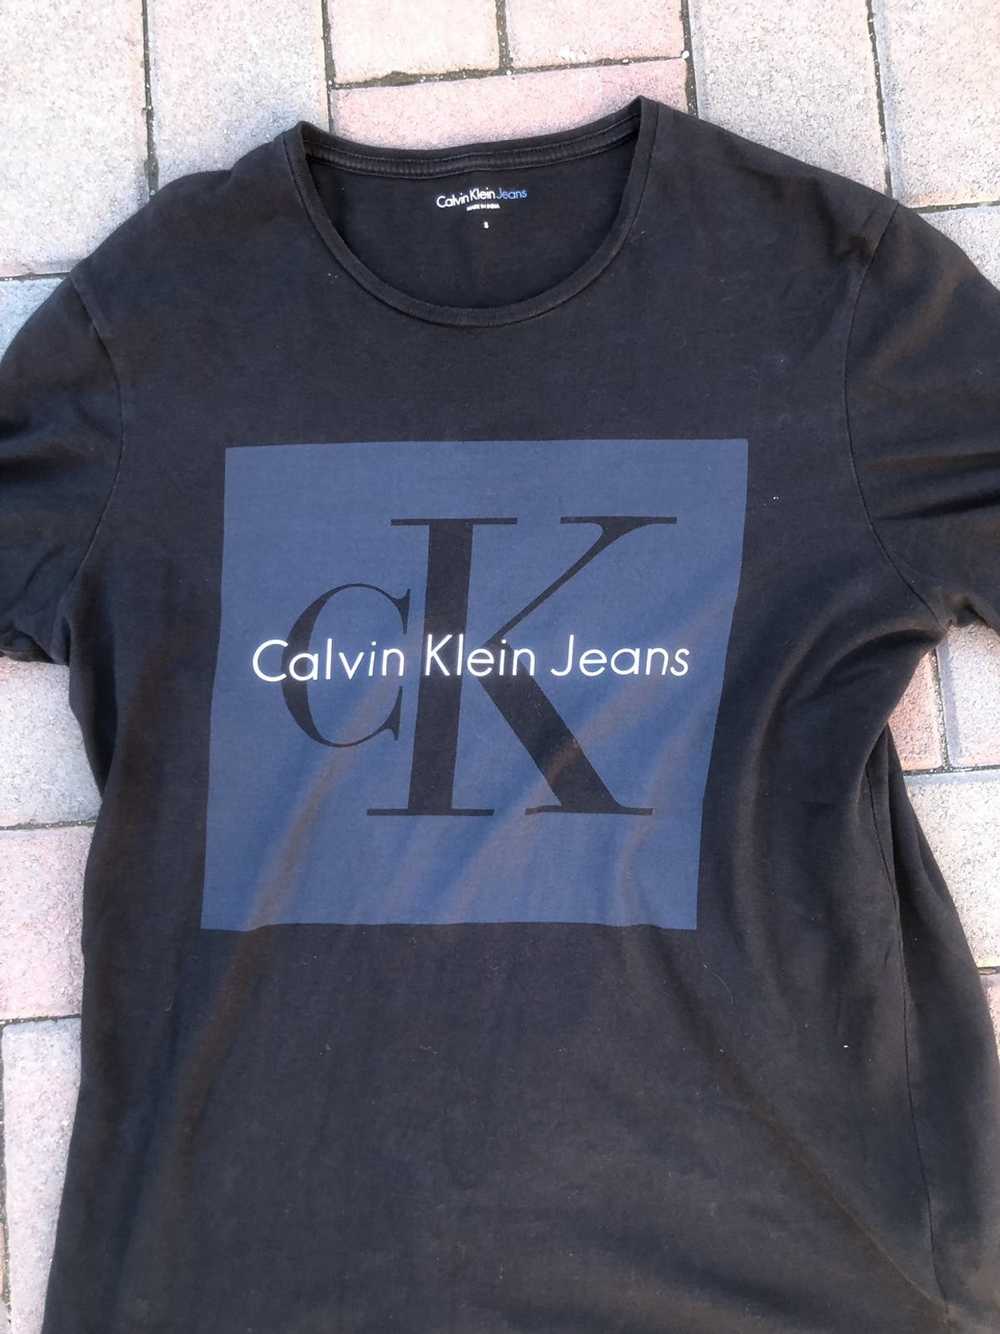 Calvin Klein Calvin Klein Jeans Black tee - image 6